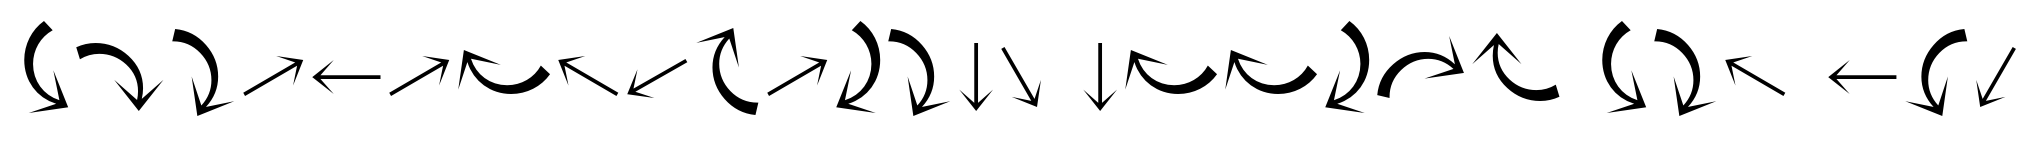 Omnidirectional Arrows One JNL image